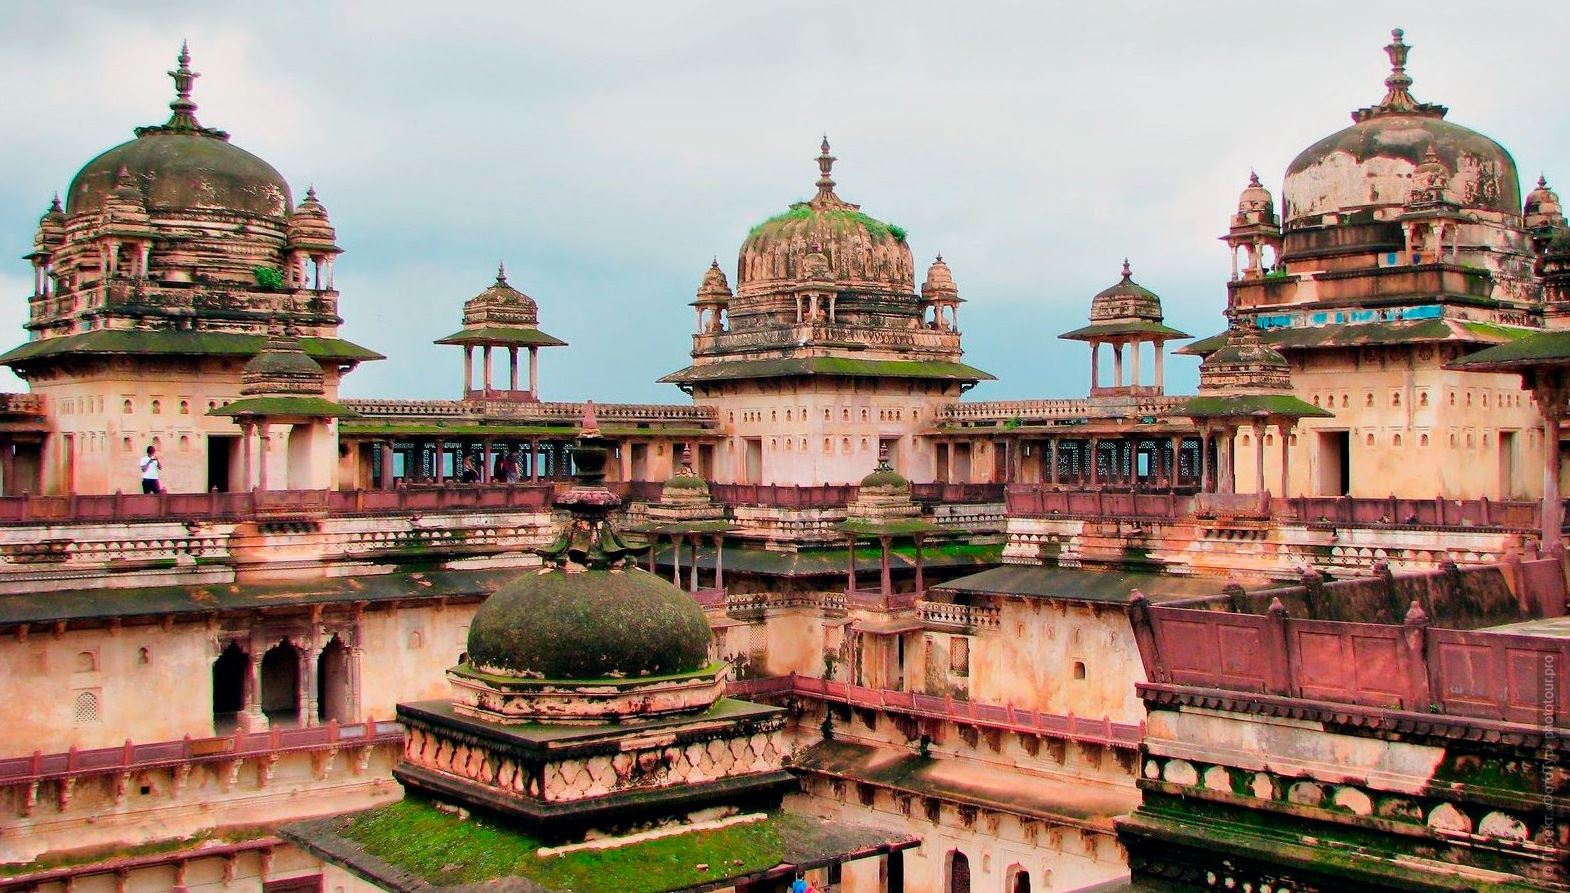 Fort Orchha, Jahangir Mahal, Raj Mahal and the Temple of Ram Raj. Tour to Orchha, India, September 2019.